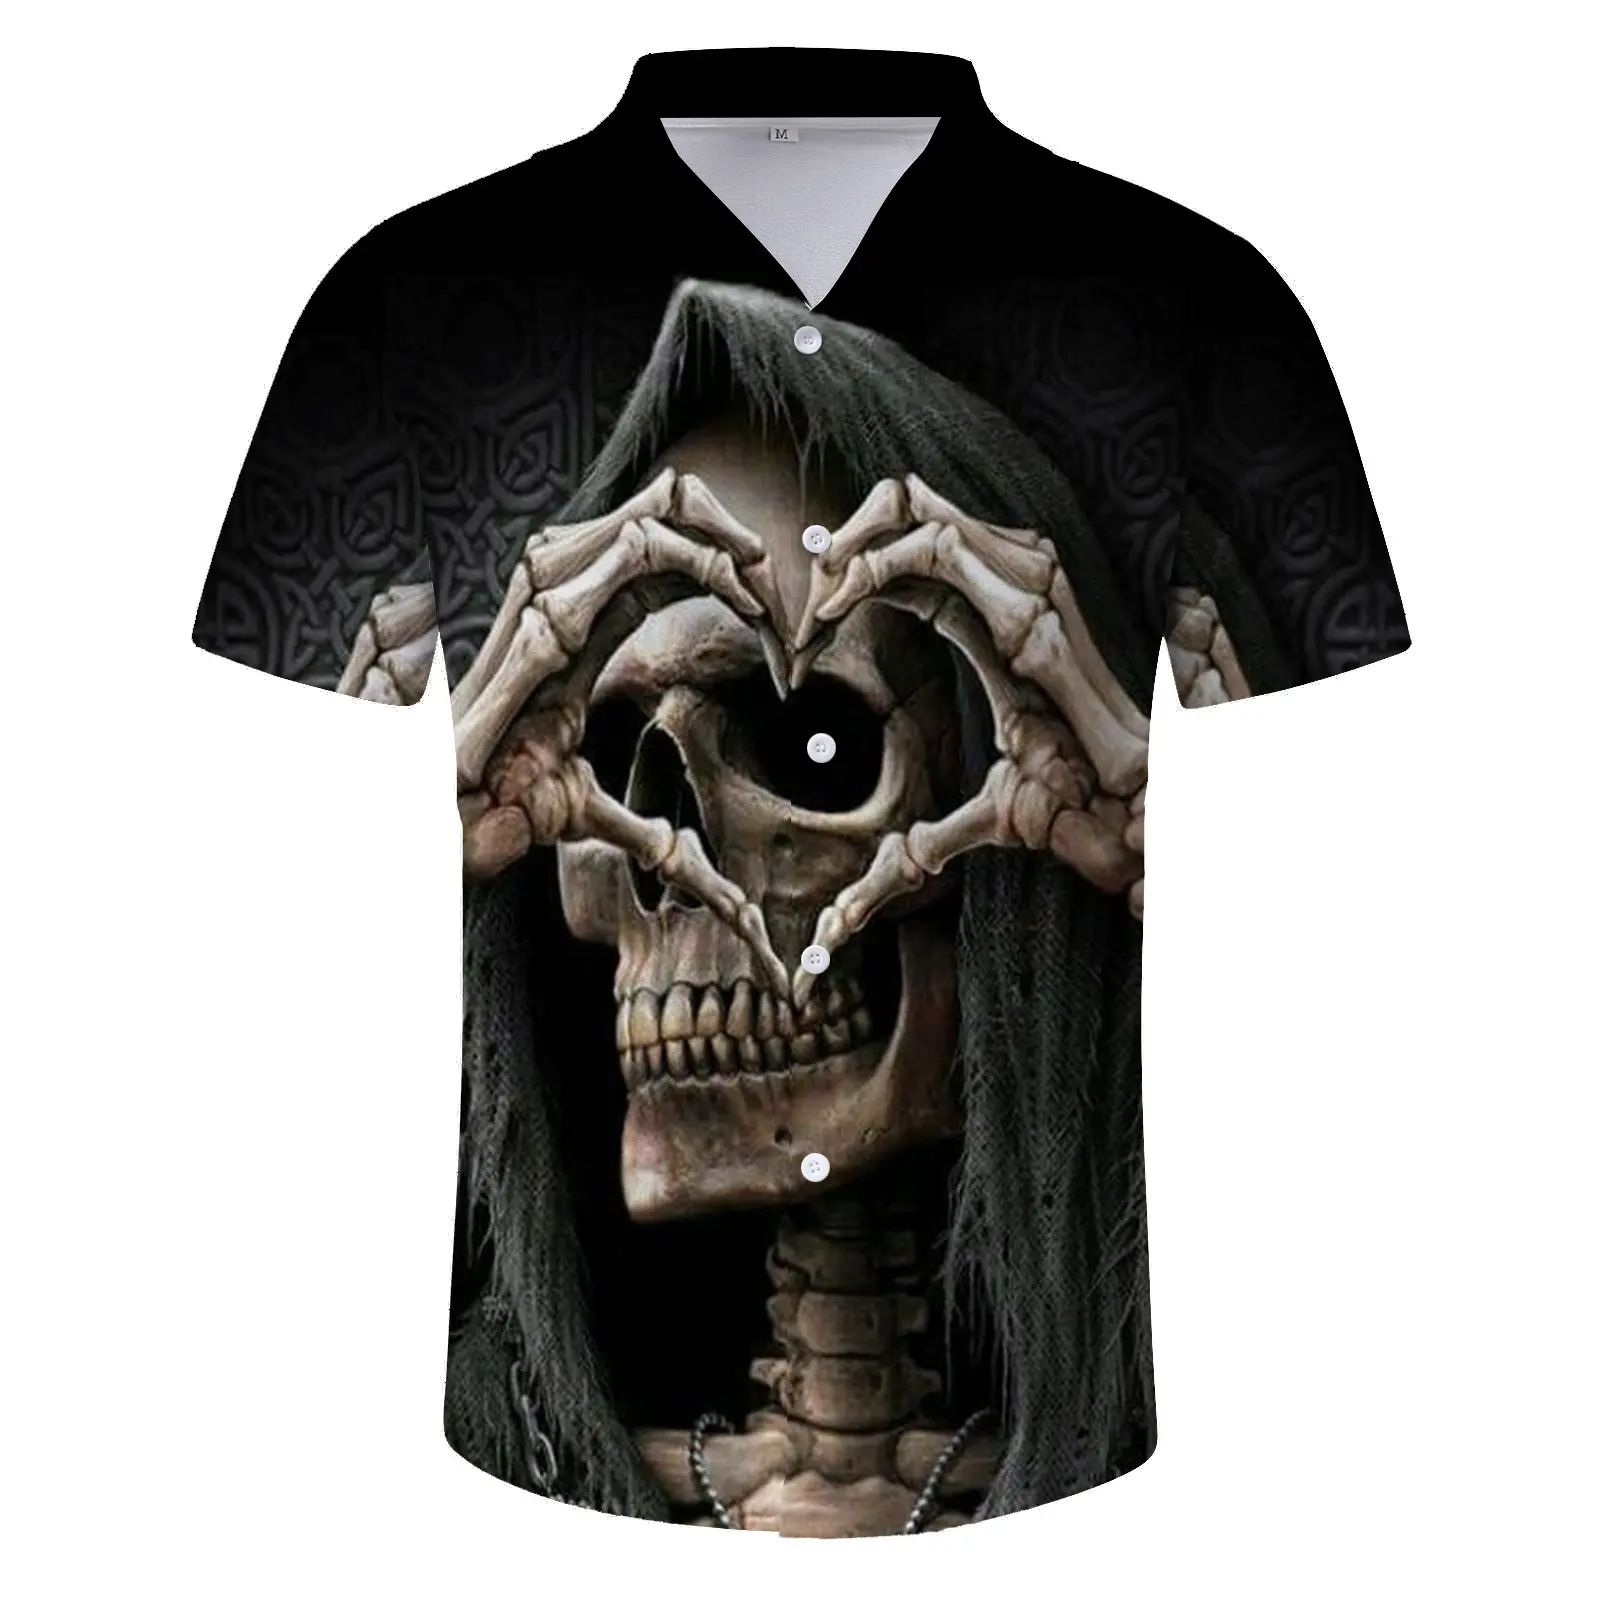 Skull summer camisa tactical hawaii sport polo shirt golf t shirts for men shirts clothes